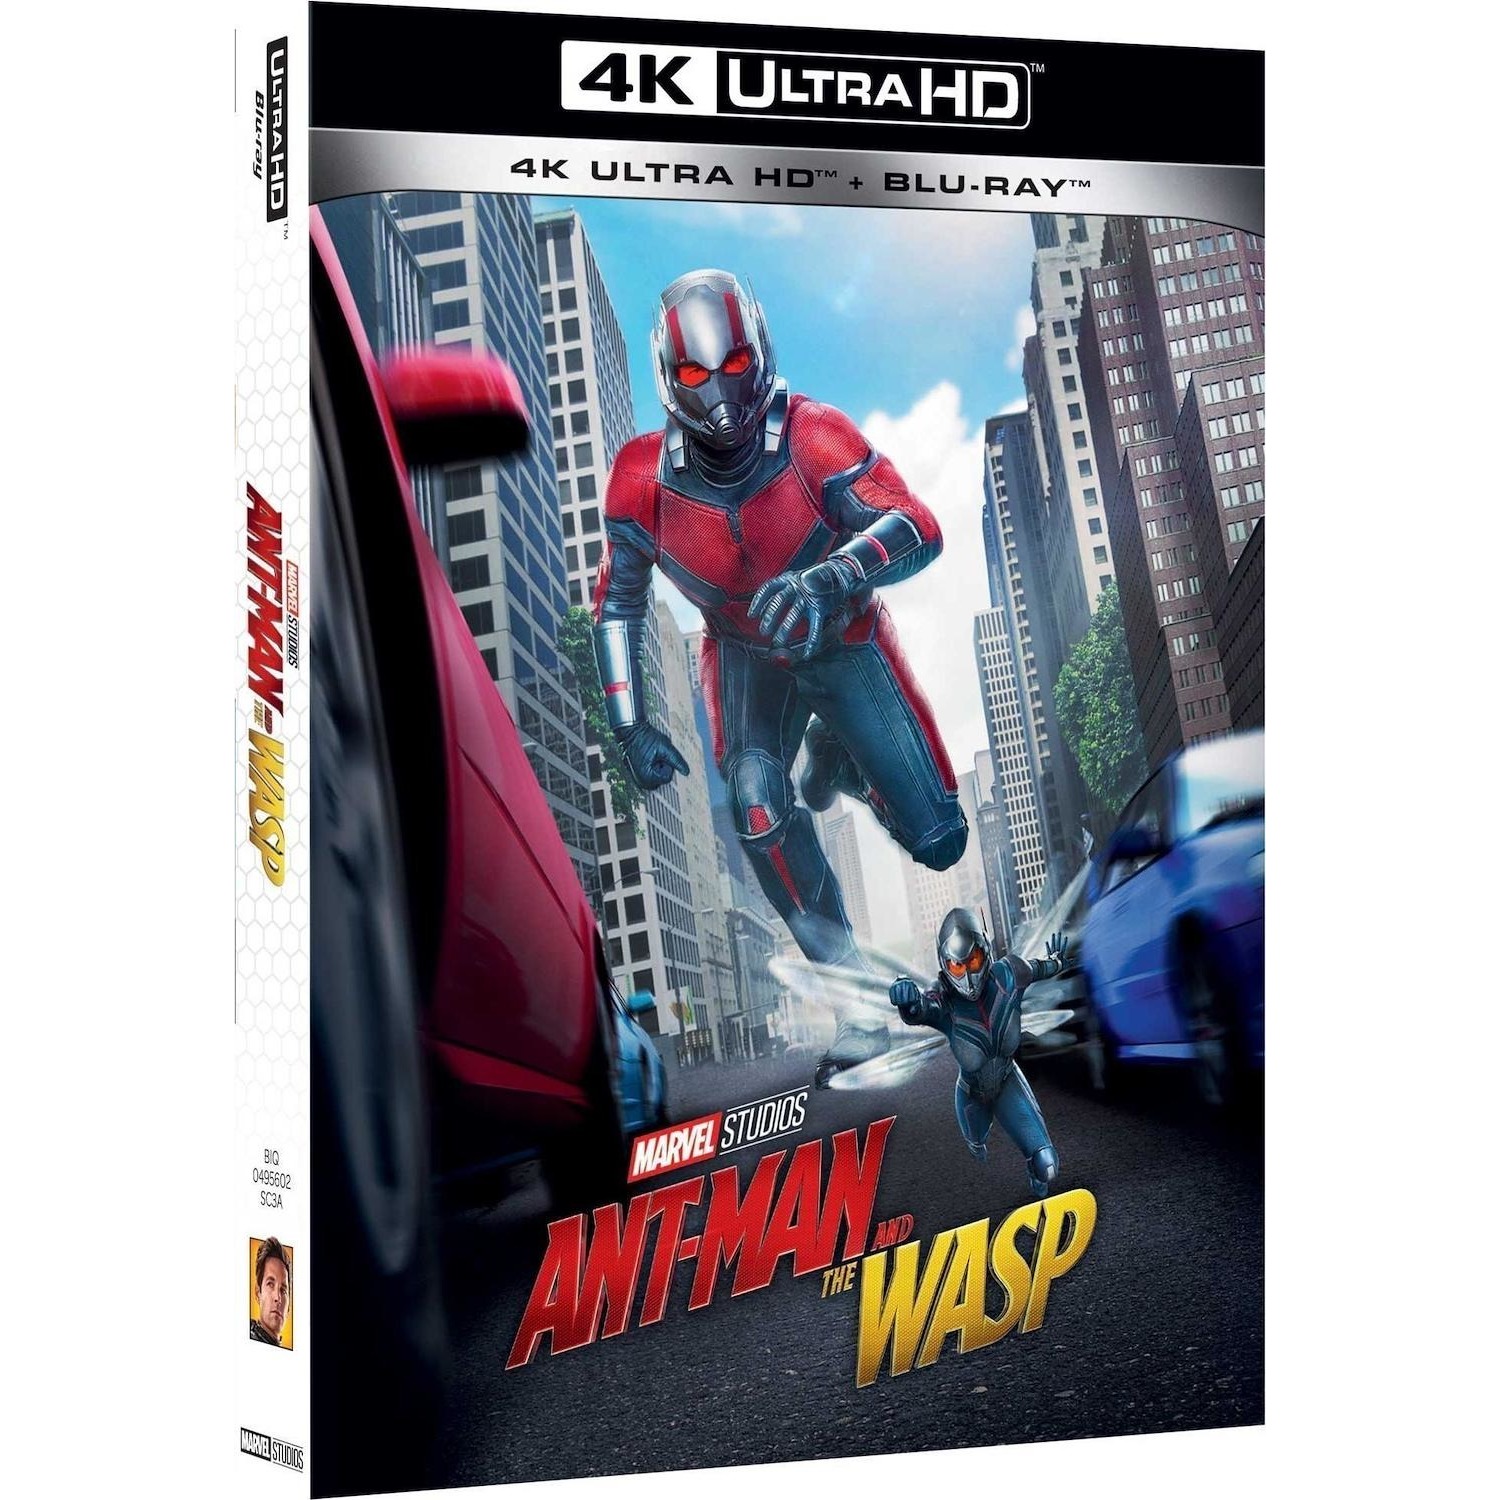 Immagine per Blu-ray 4K Ant-Man and the Wasp da DIMOStore